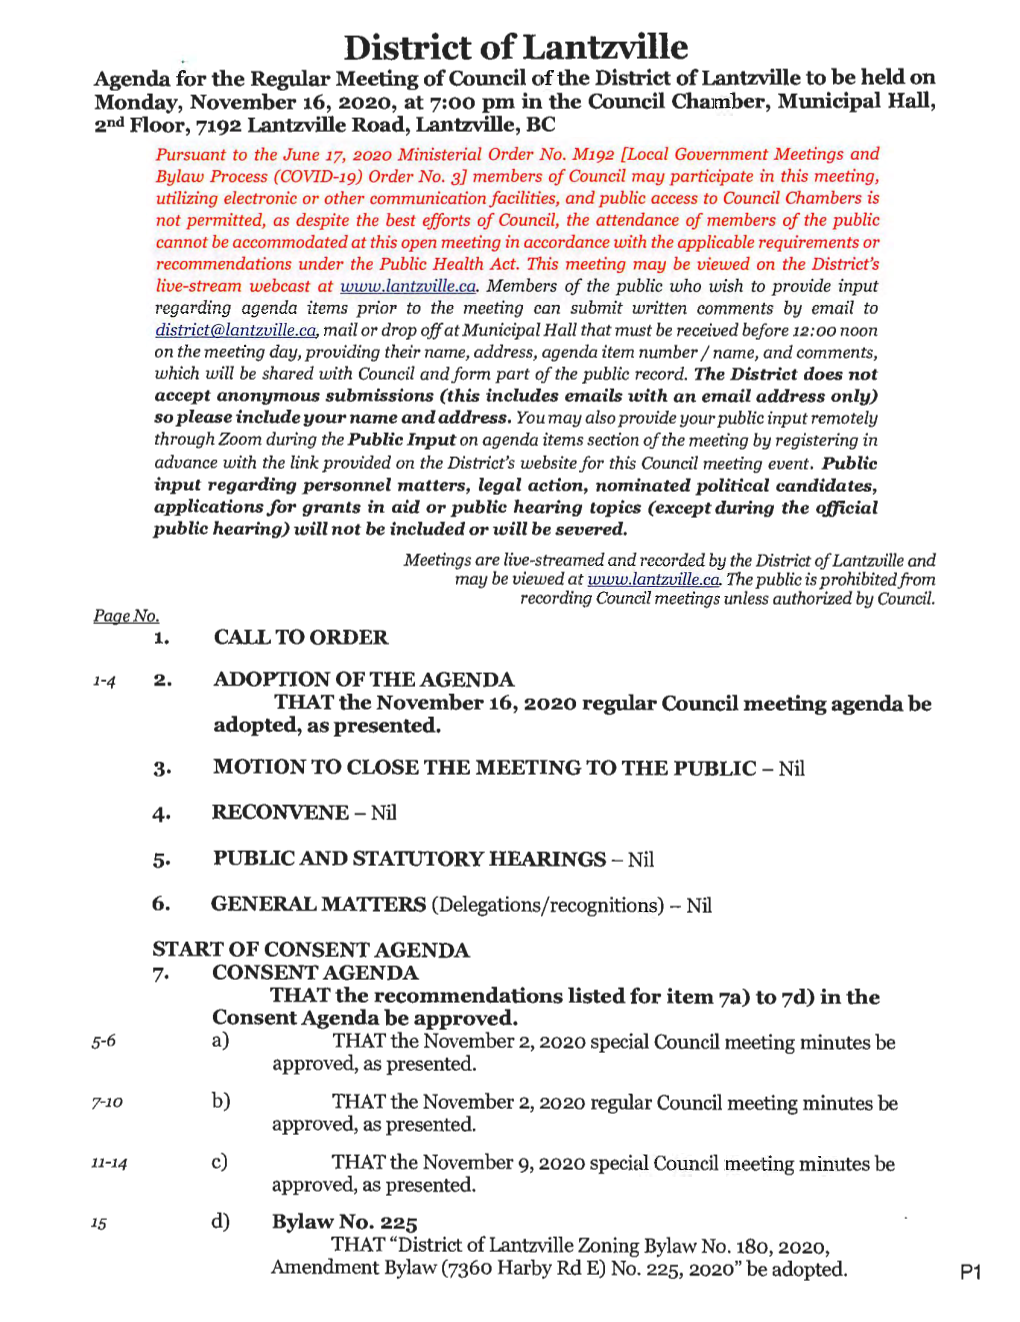 November 16, 2020 Regular Council Meeting Agenda Be Adopted, As Presented